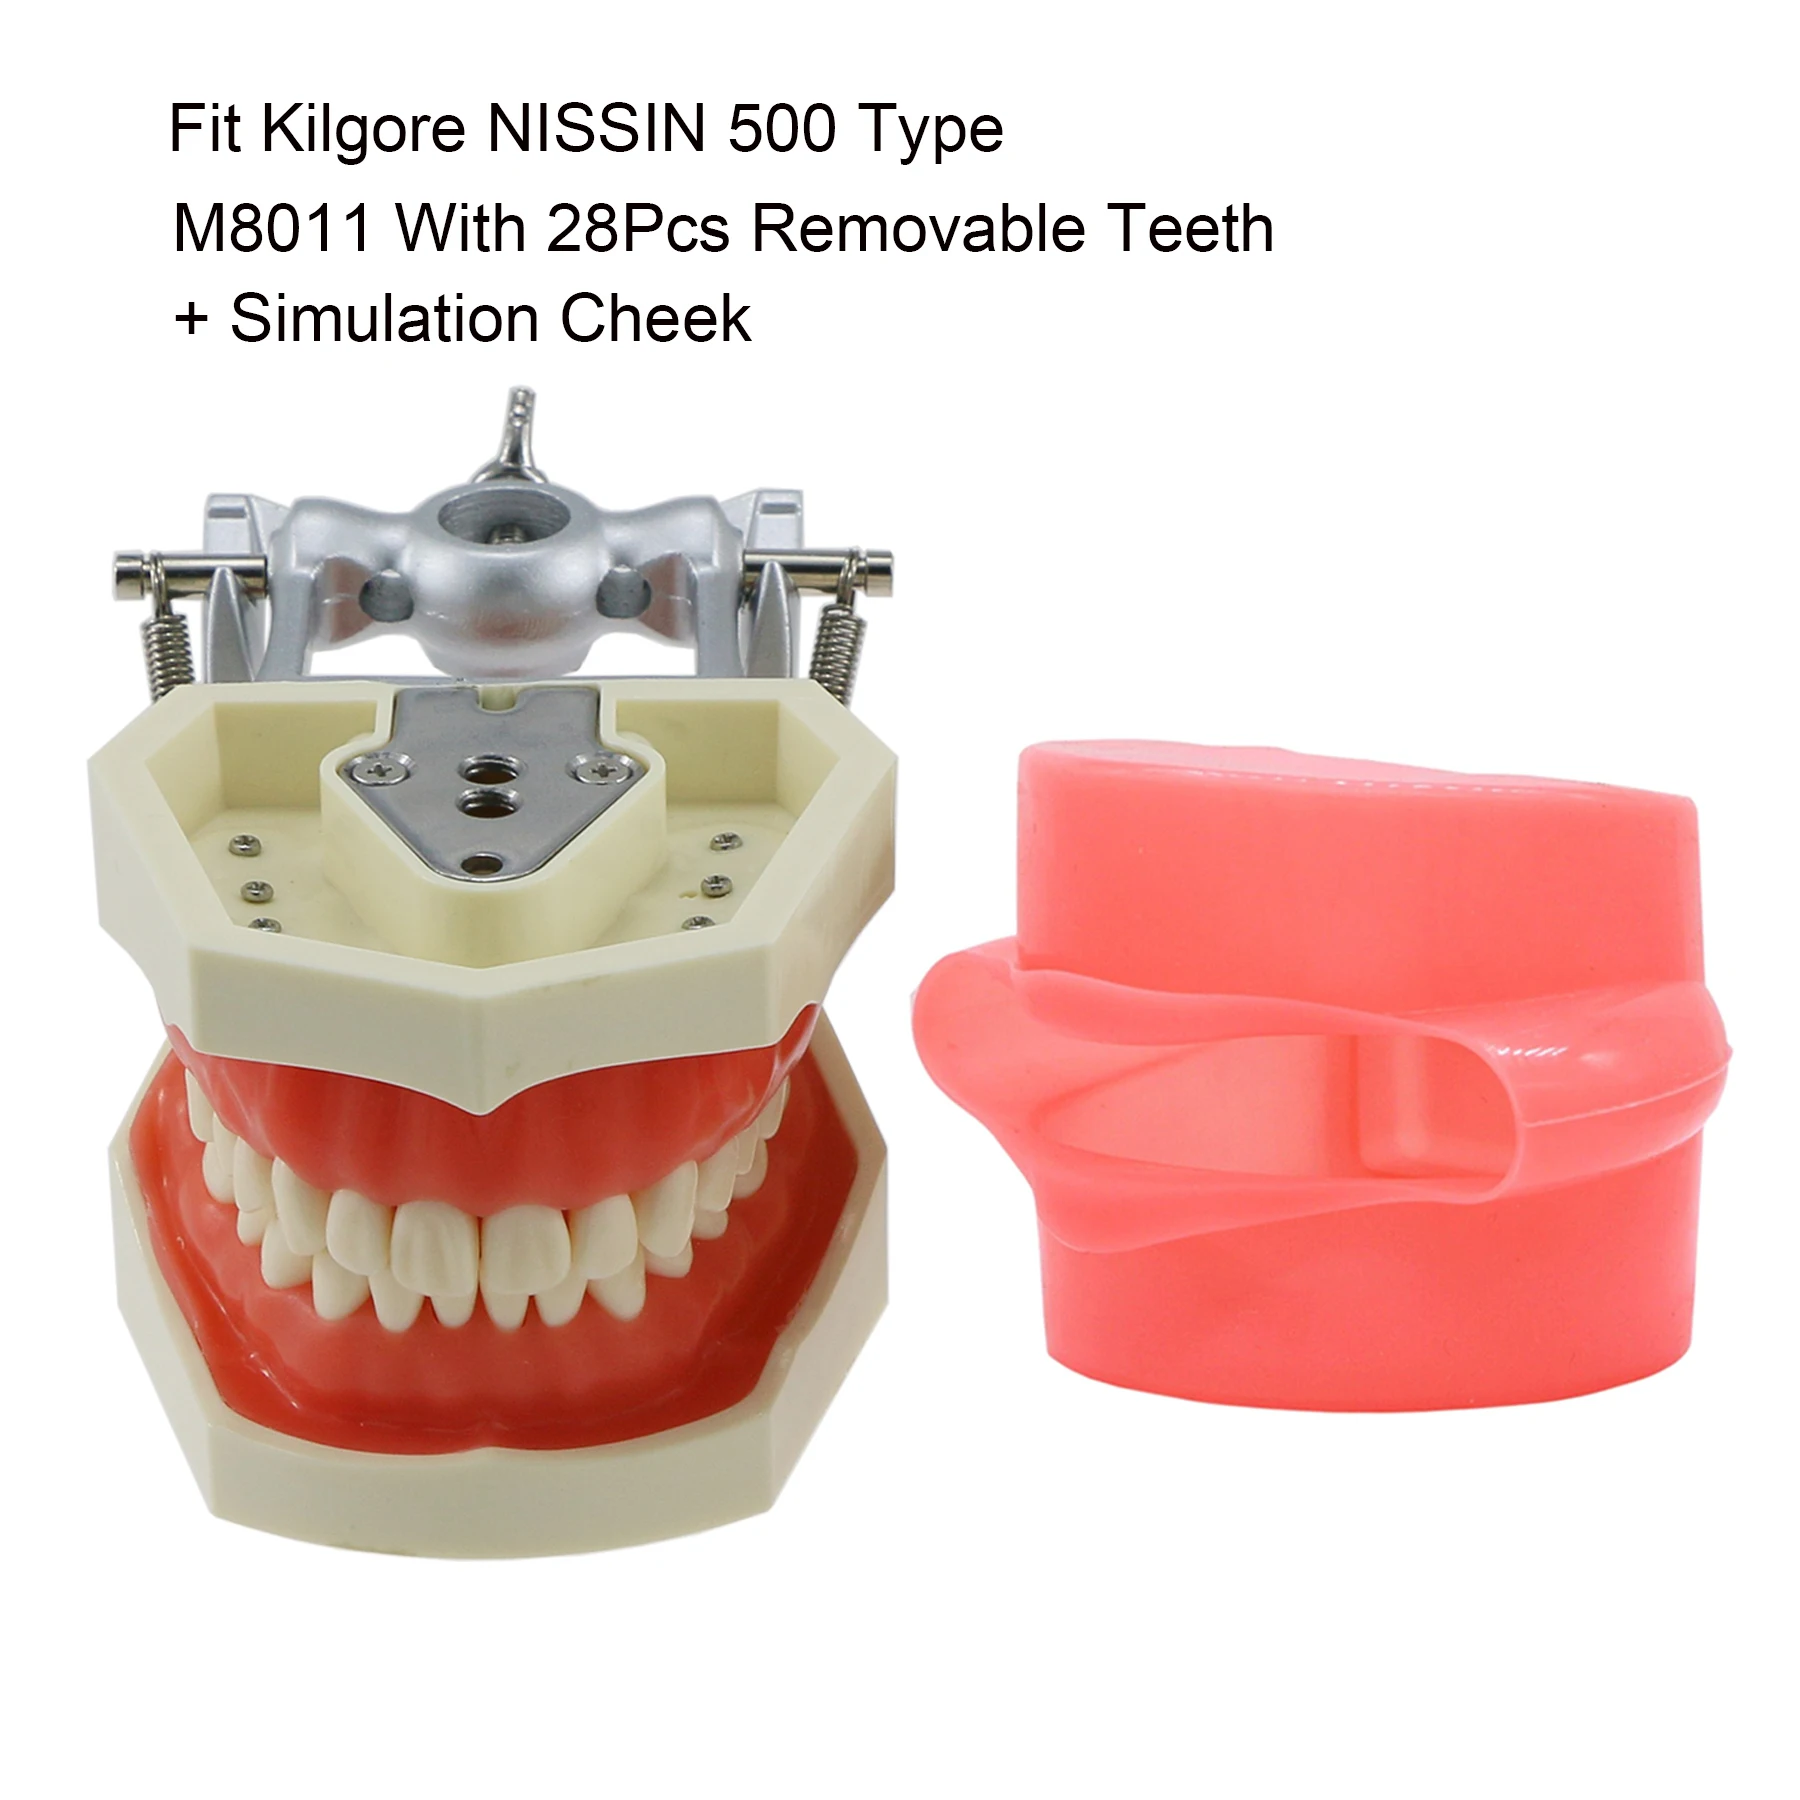 Kilgore Nissin 500 Type Fit Dental Screw-in Typodont Demo Standard Practice Filling 28Pcs Teeth Model With Simulation Cheek